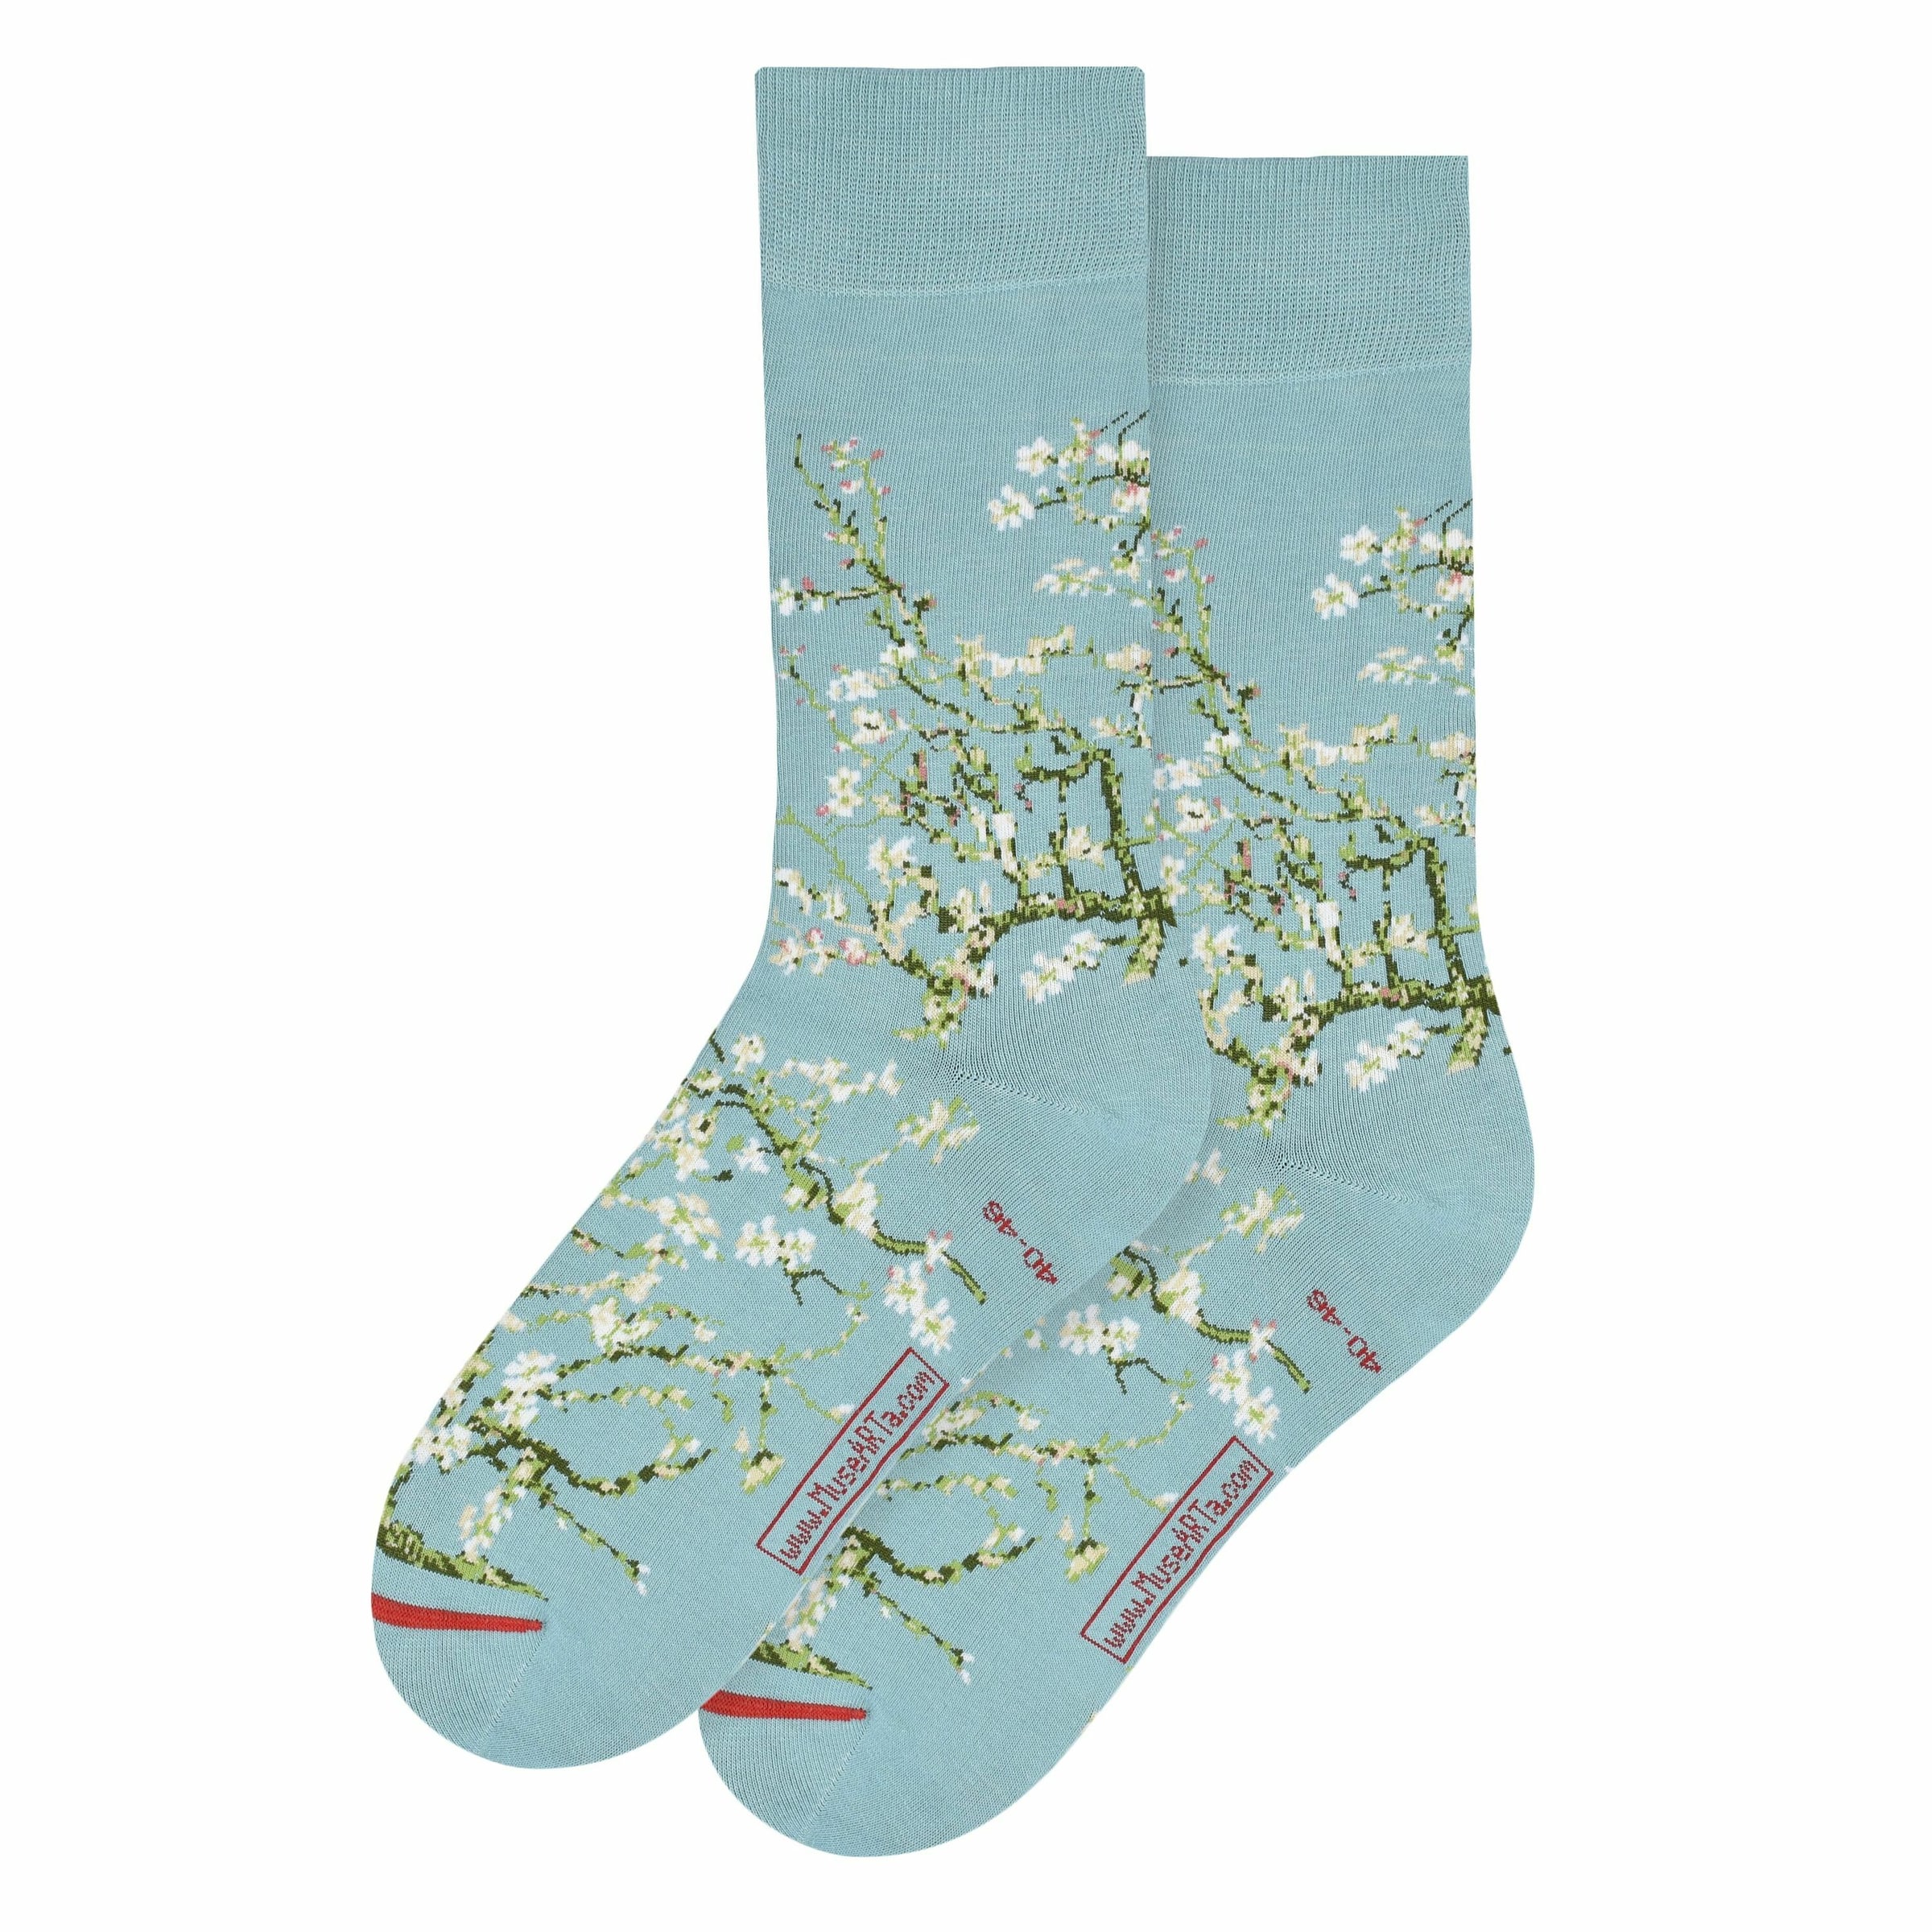 MuseARTa Socken Vincent Van Gogh - Blühende Mandelblüten in Mischfarben 